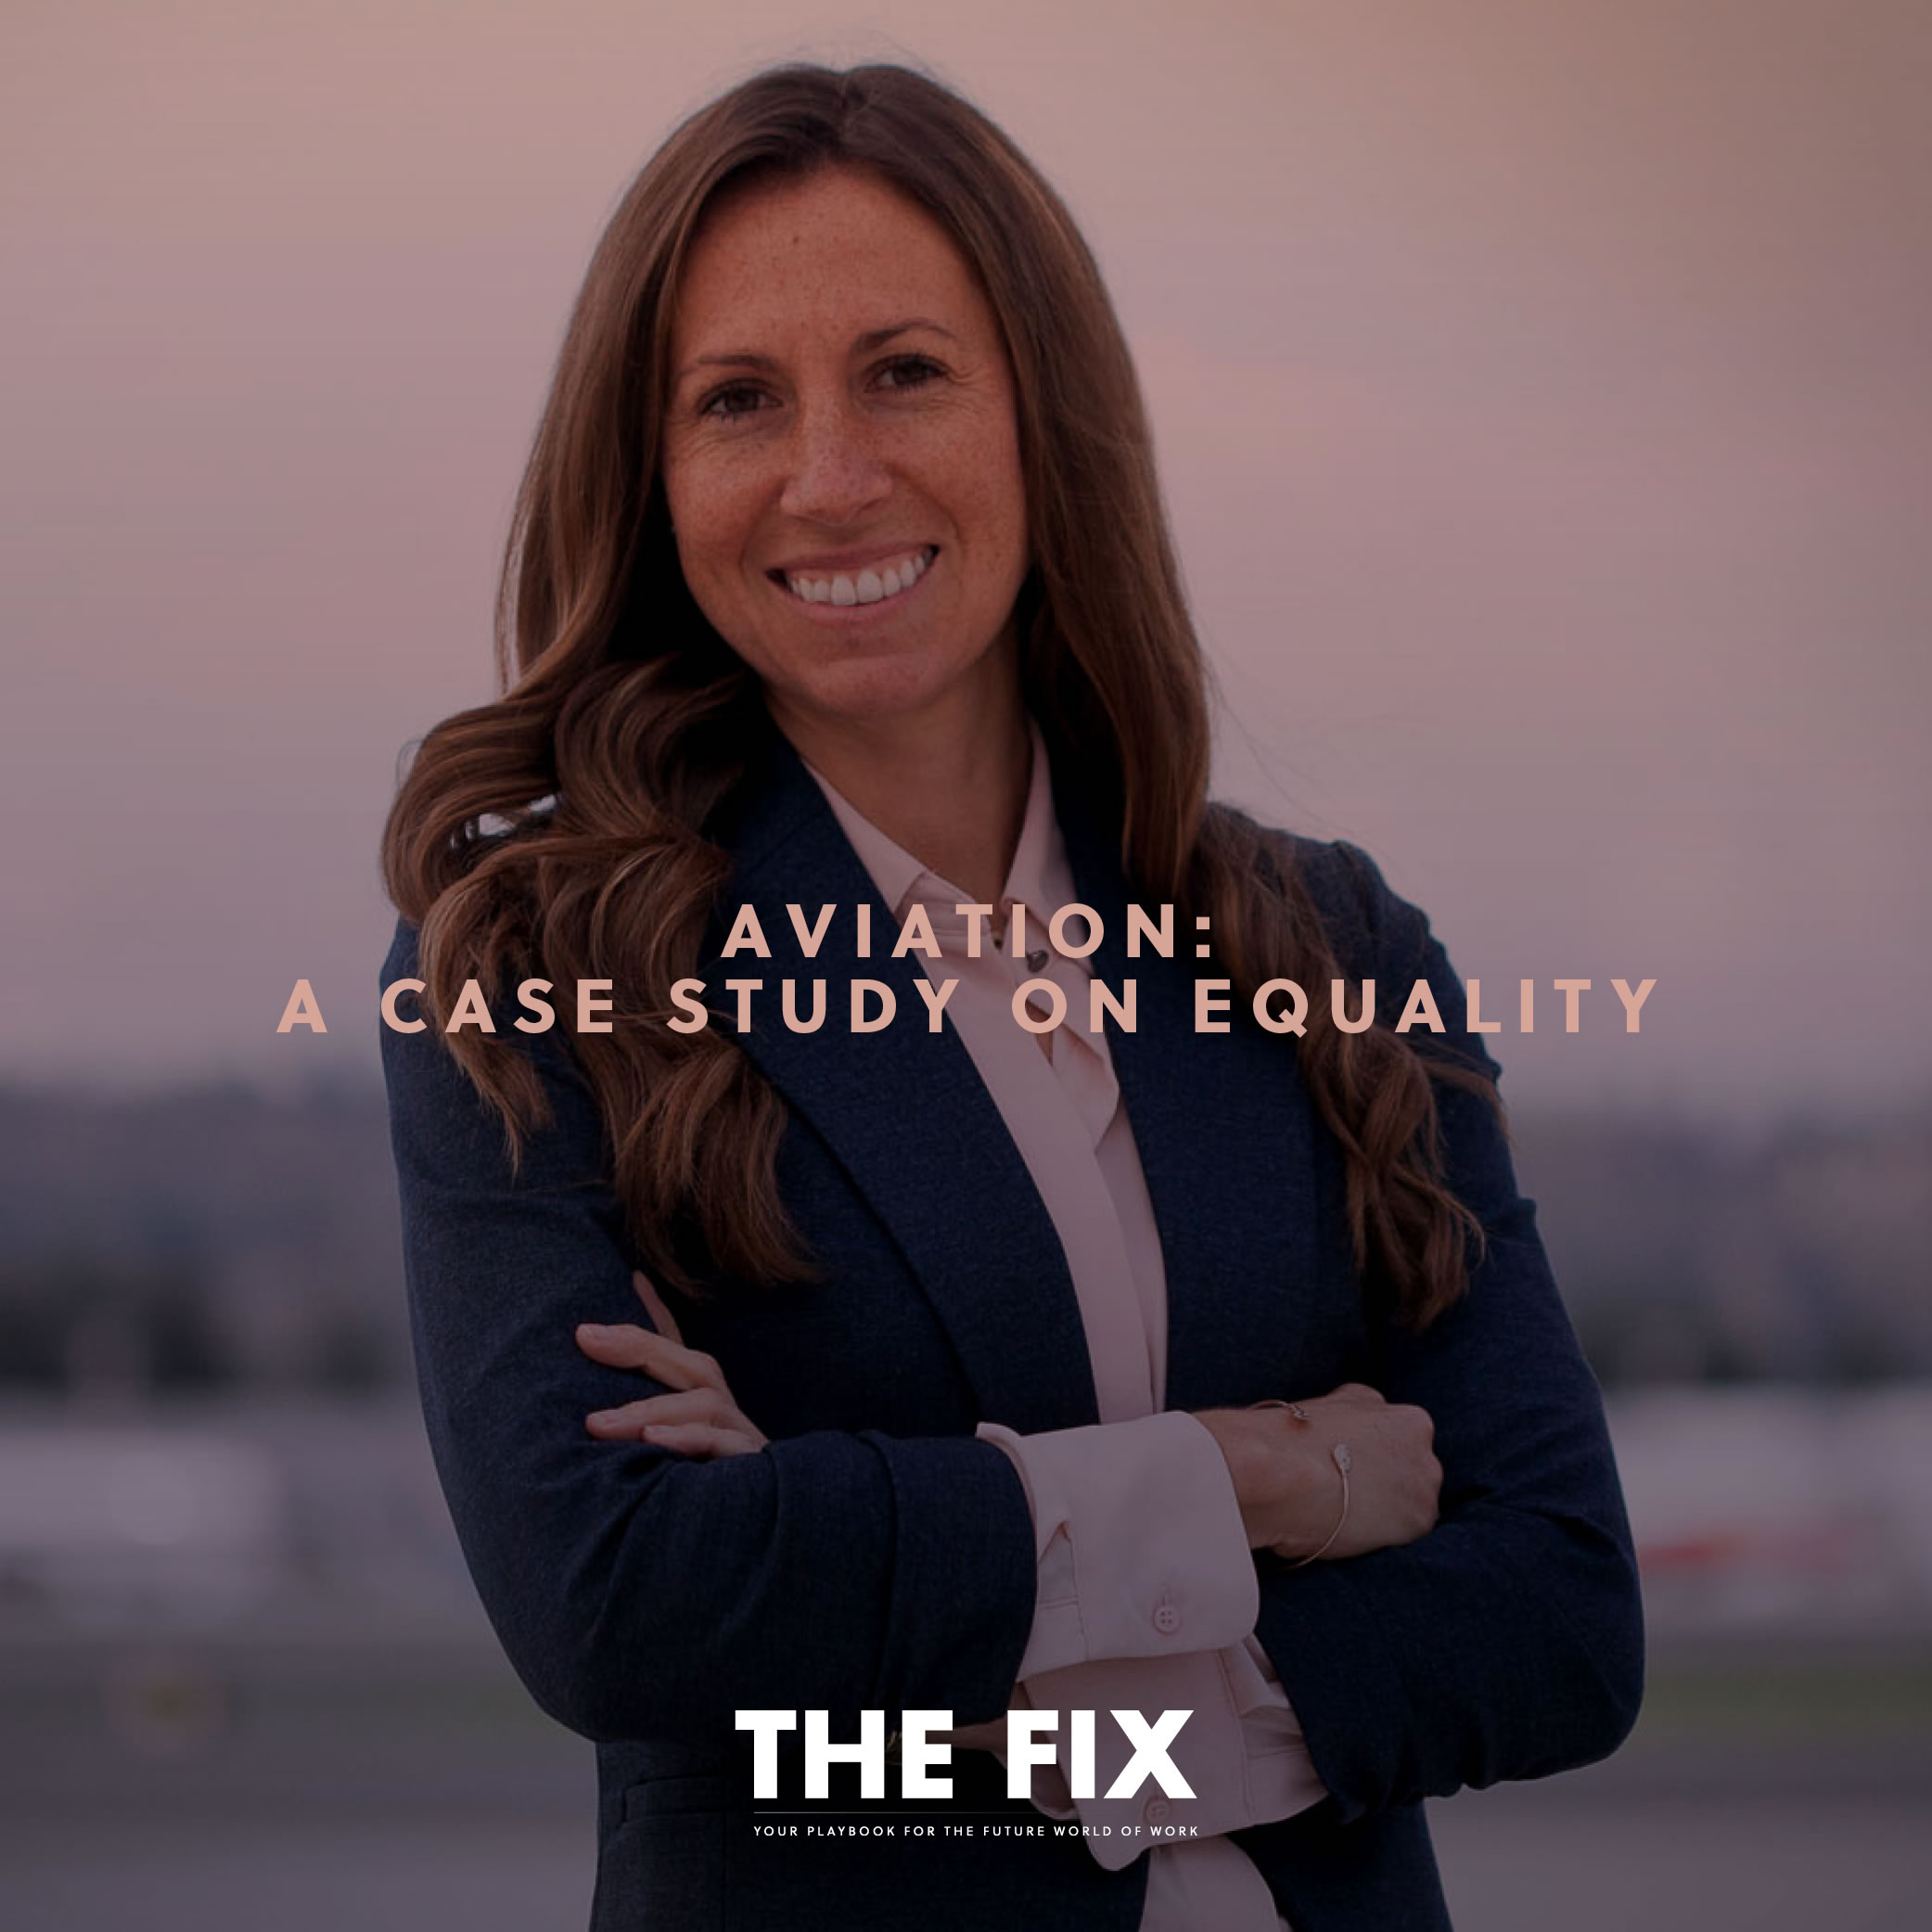 Aviation: A Case Study on Equality